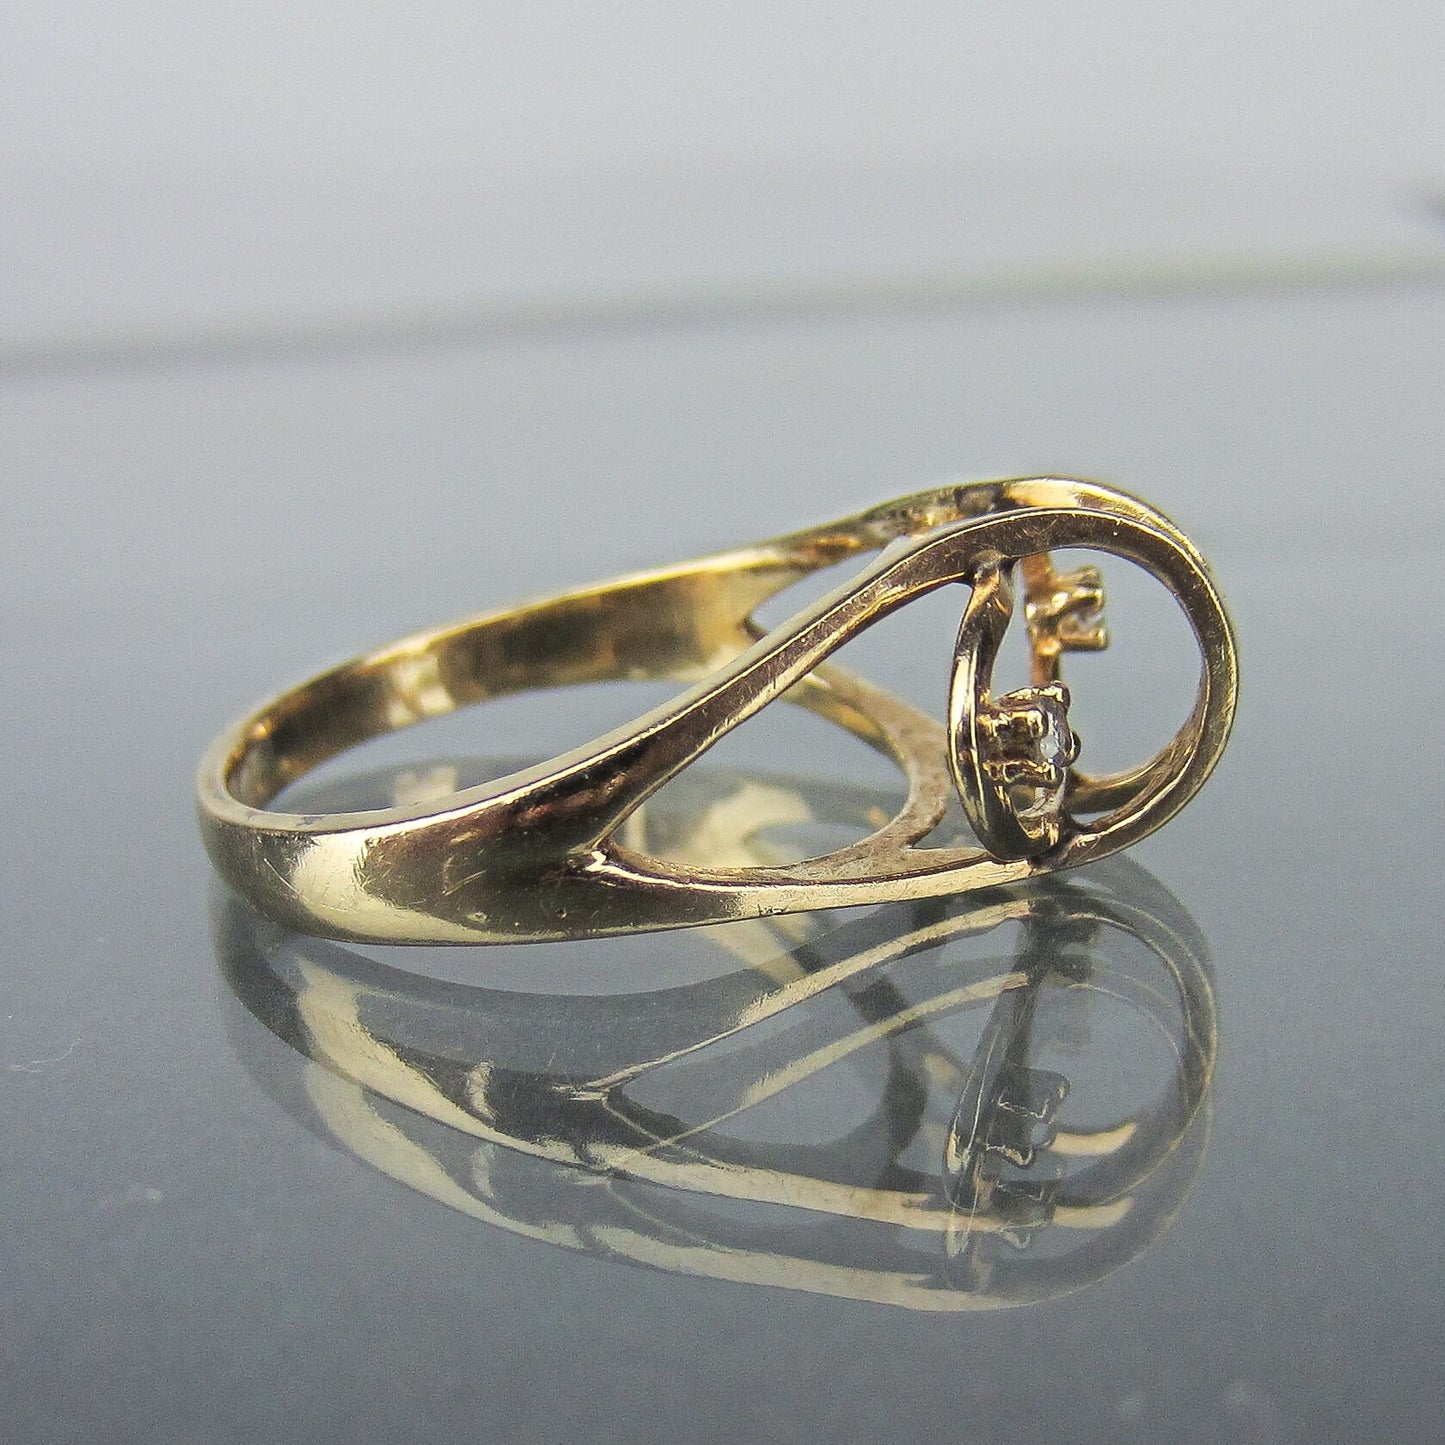 SOLD--Modernist Diamond Sculptural Ring 14k c. 1960